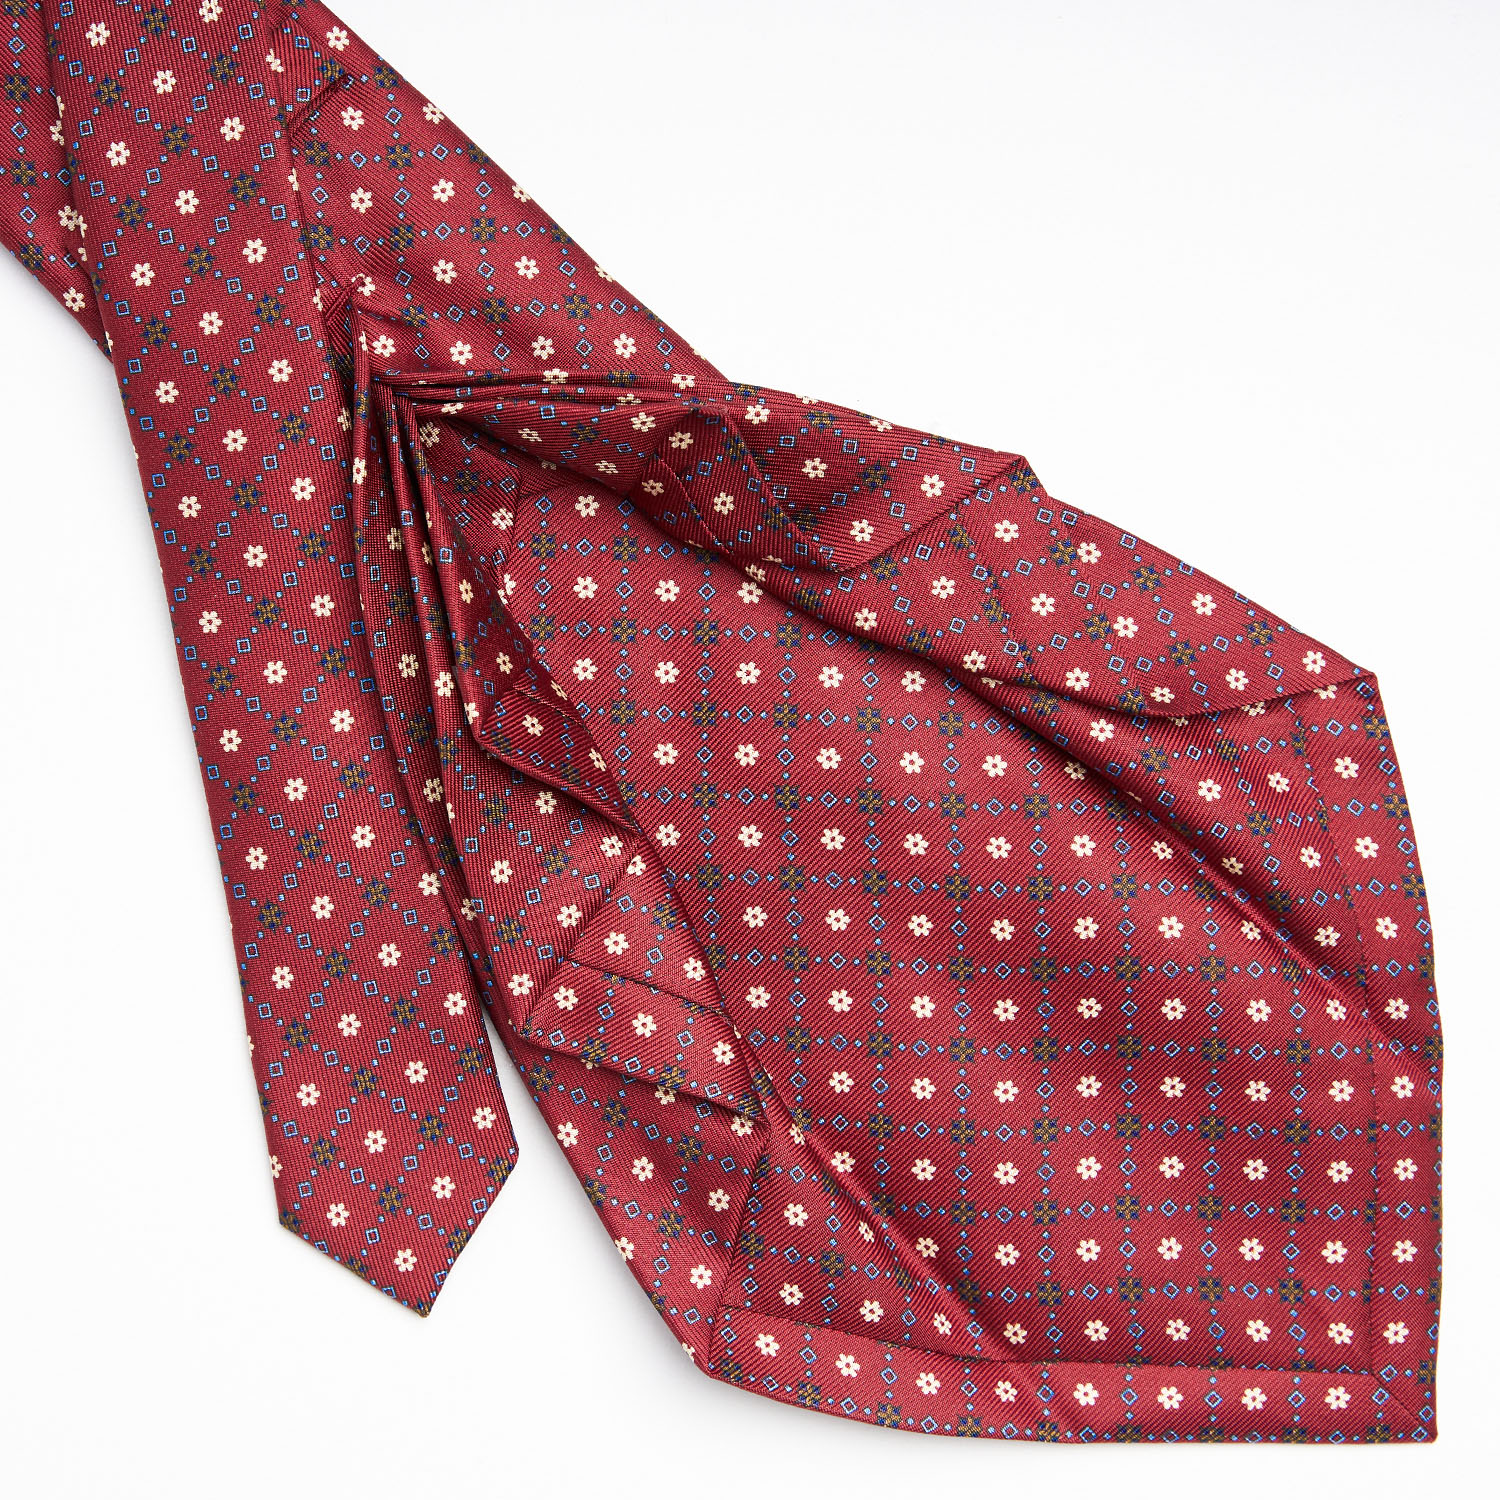 nine fold tie _ cravatta 9 pieghe